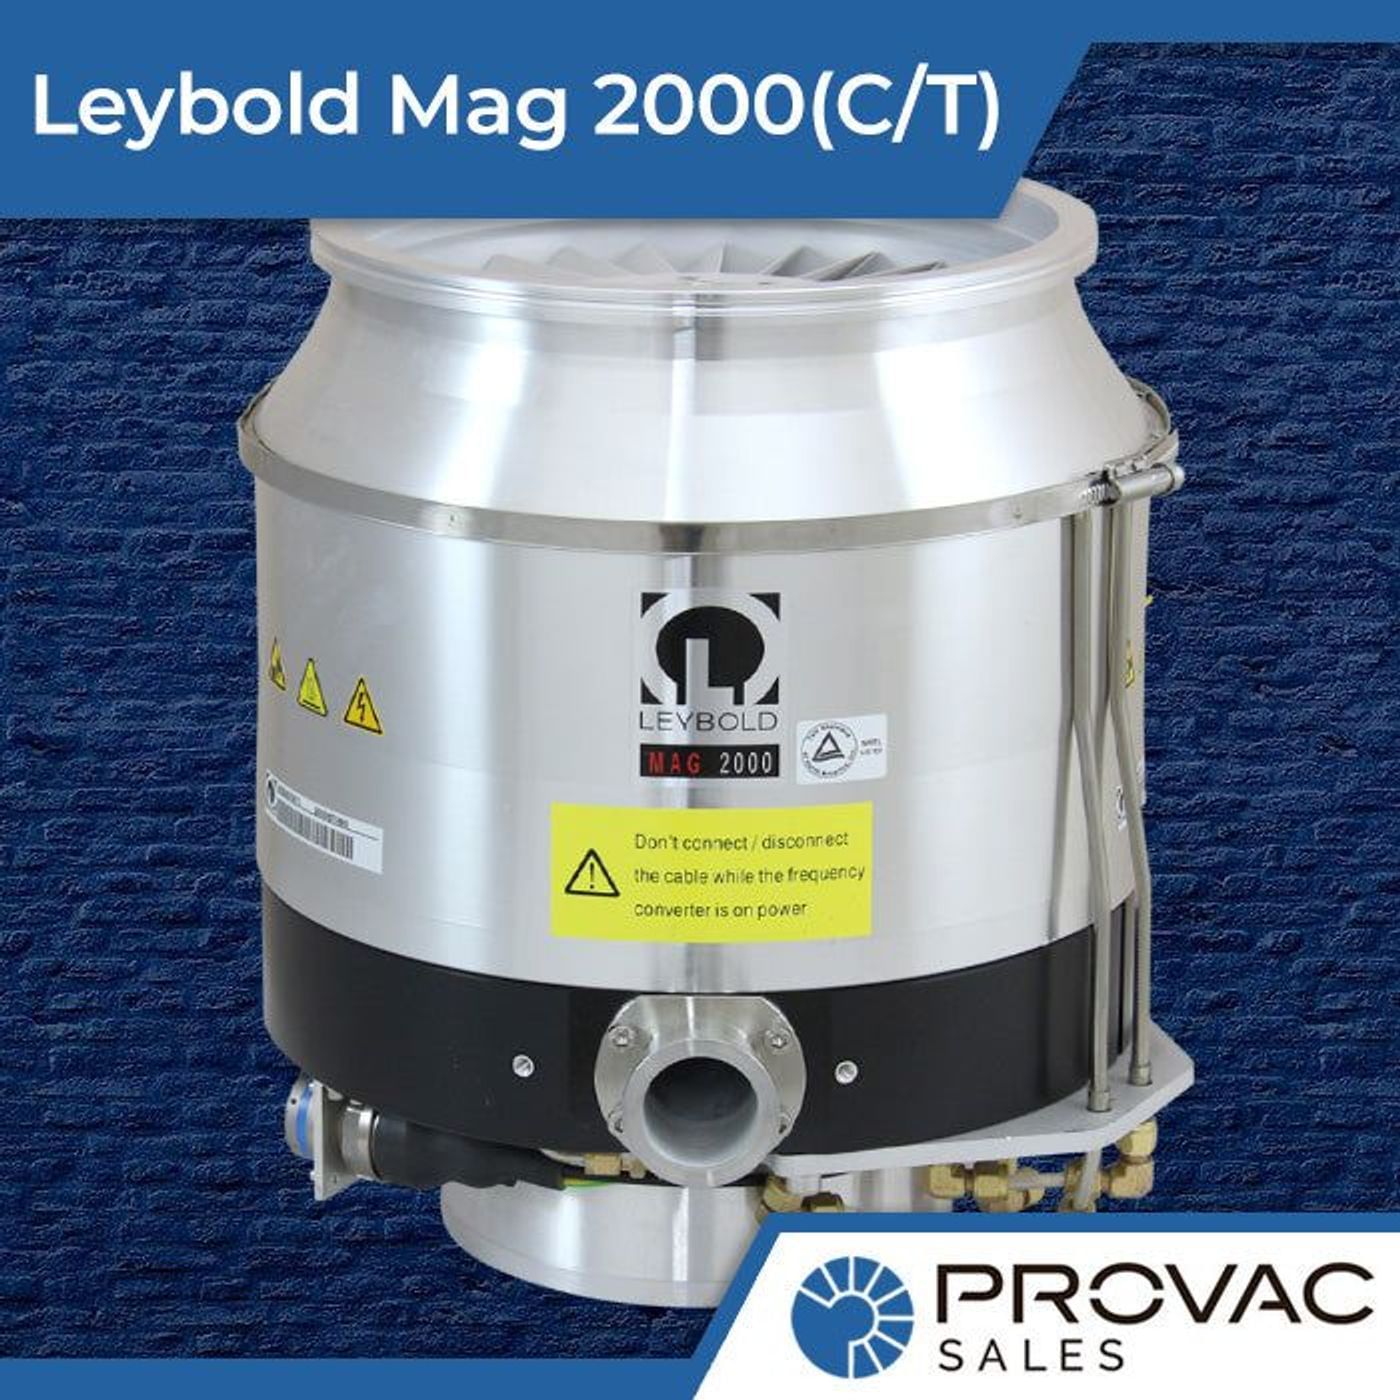 Product Spotlight: Leybold Mag 2000C/CT Turbo Pump